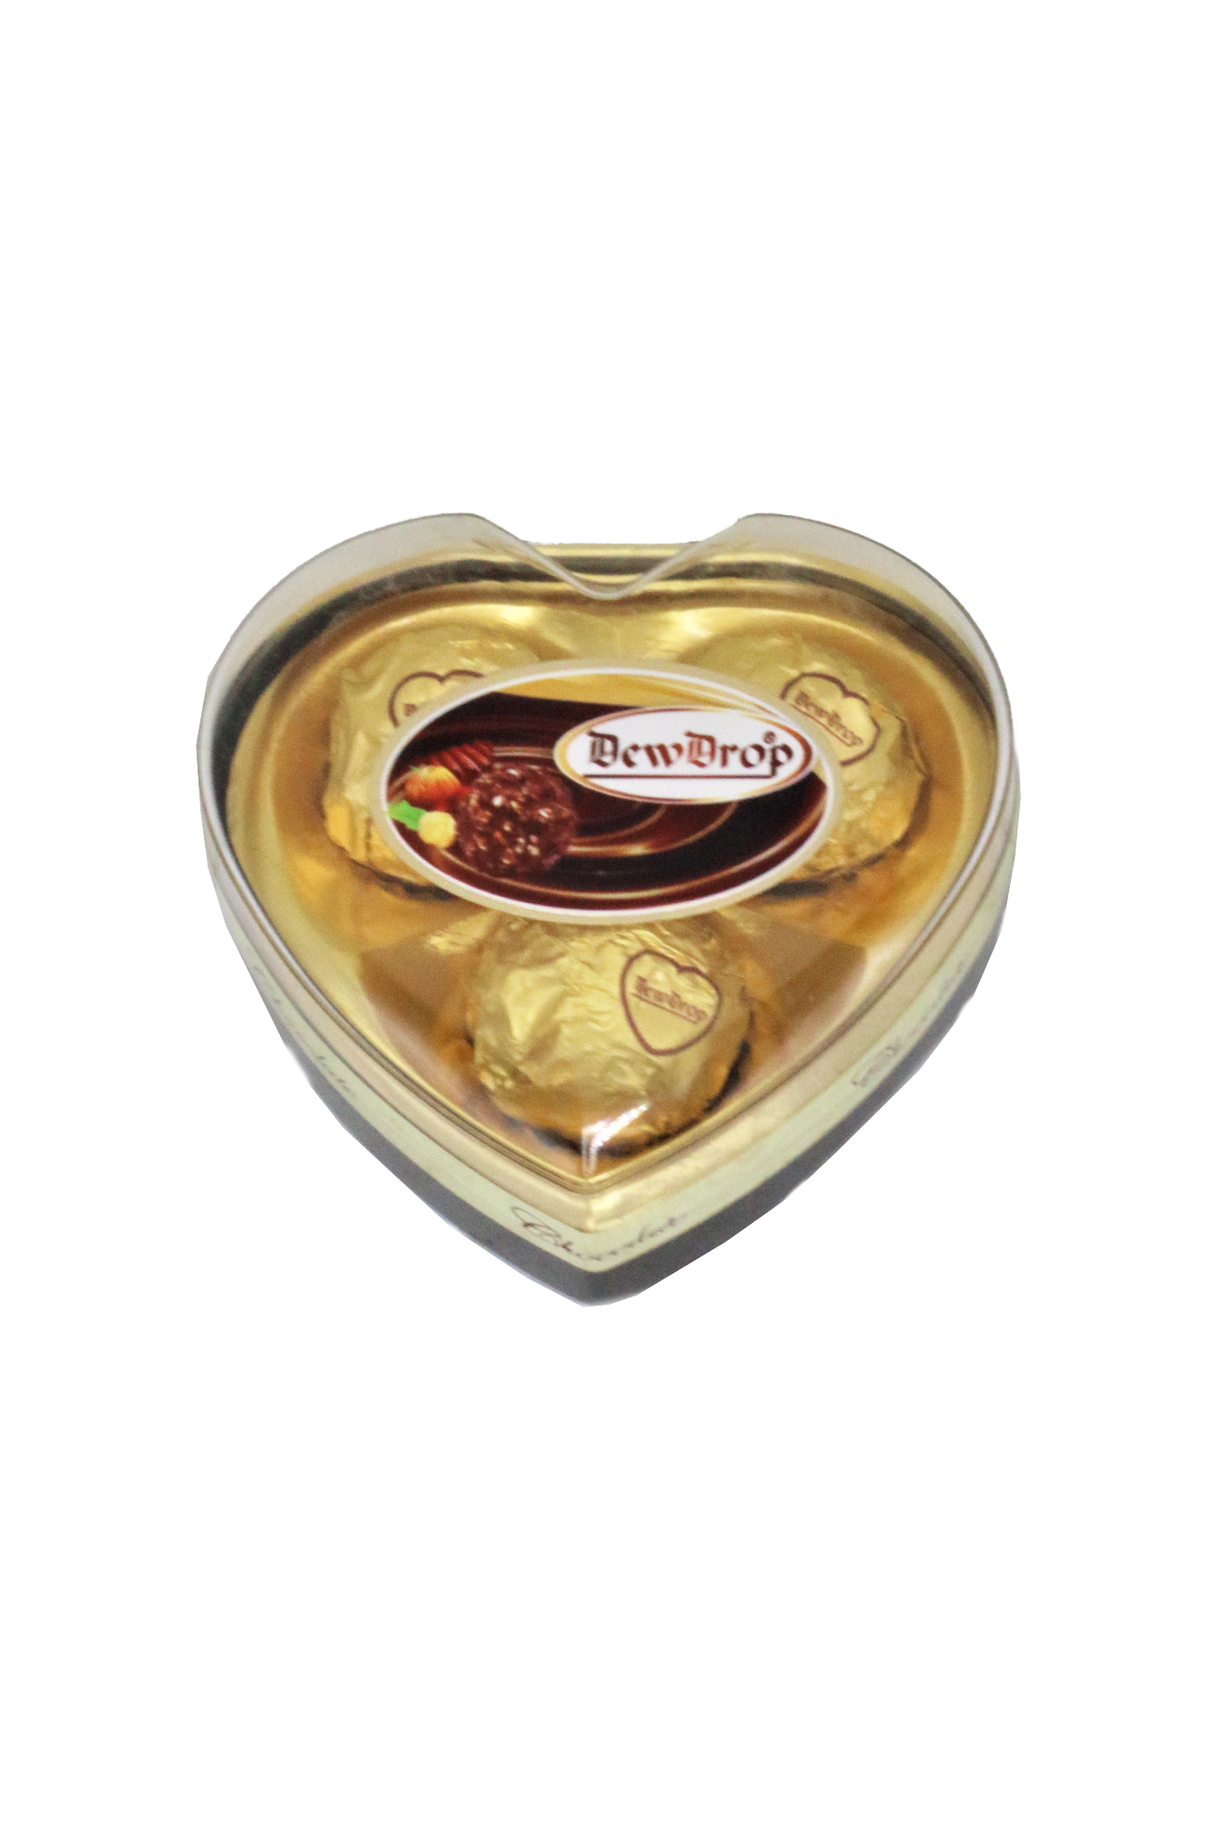 dewdrop chocolate 38g h03g-p